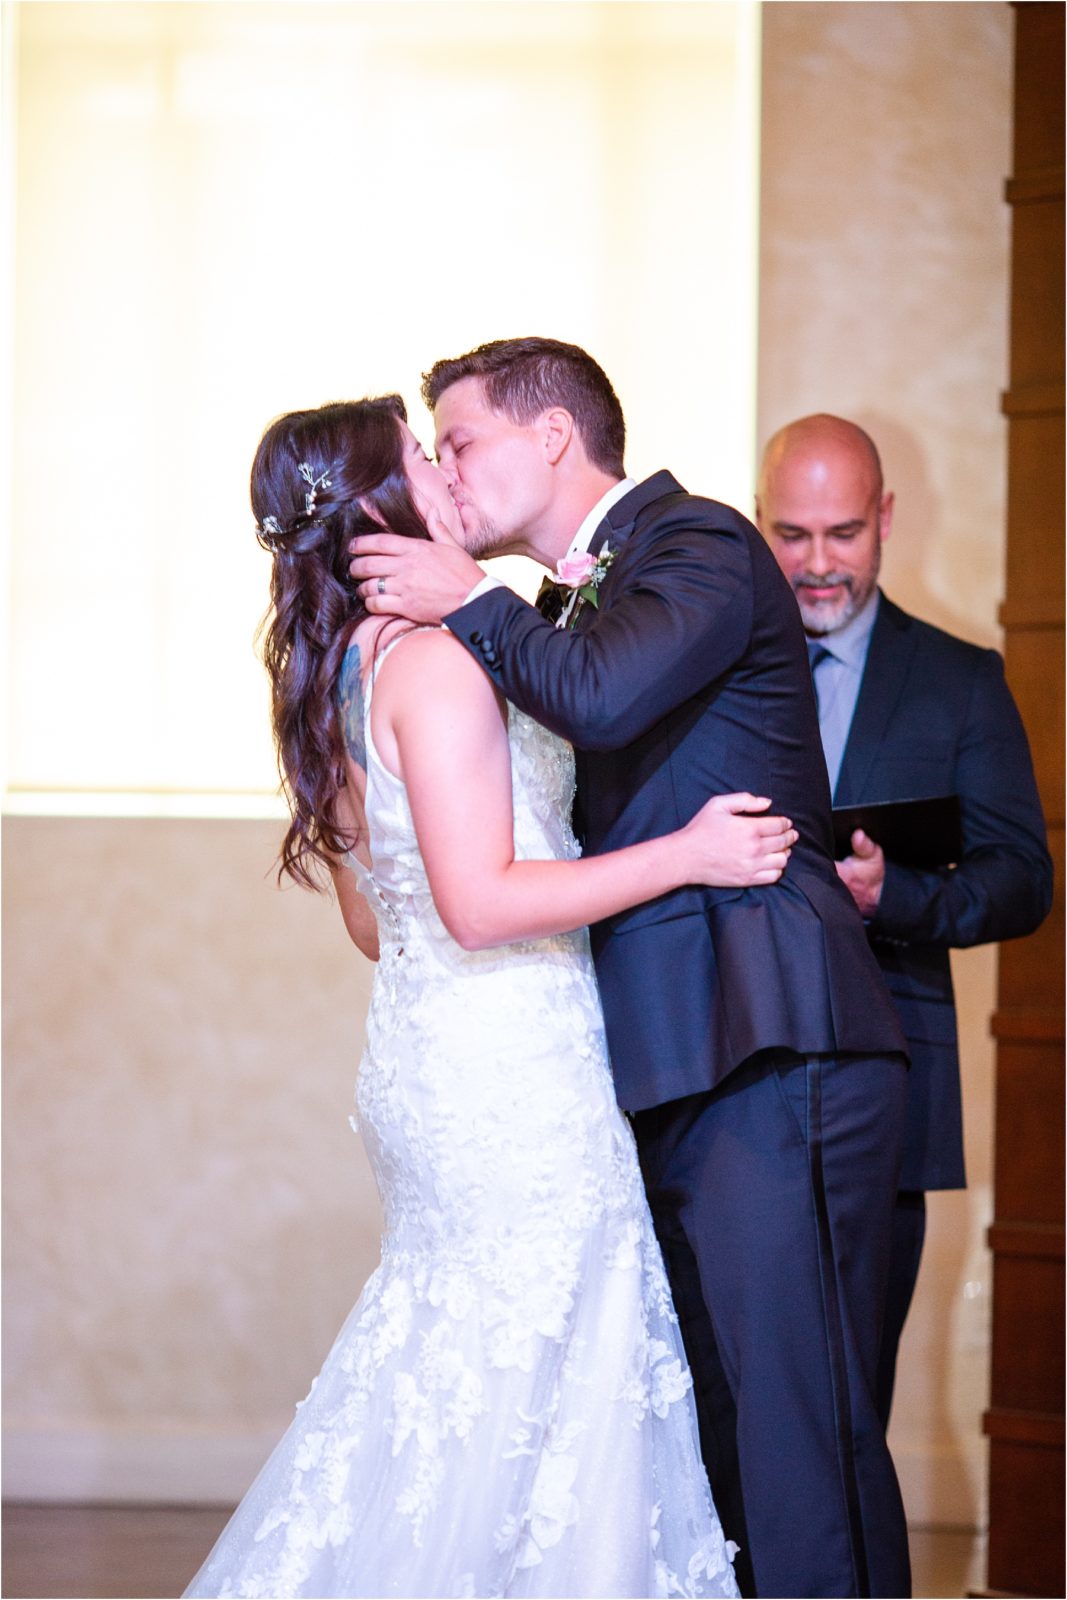 Groom kisses bride during wedding ceremony